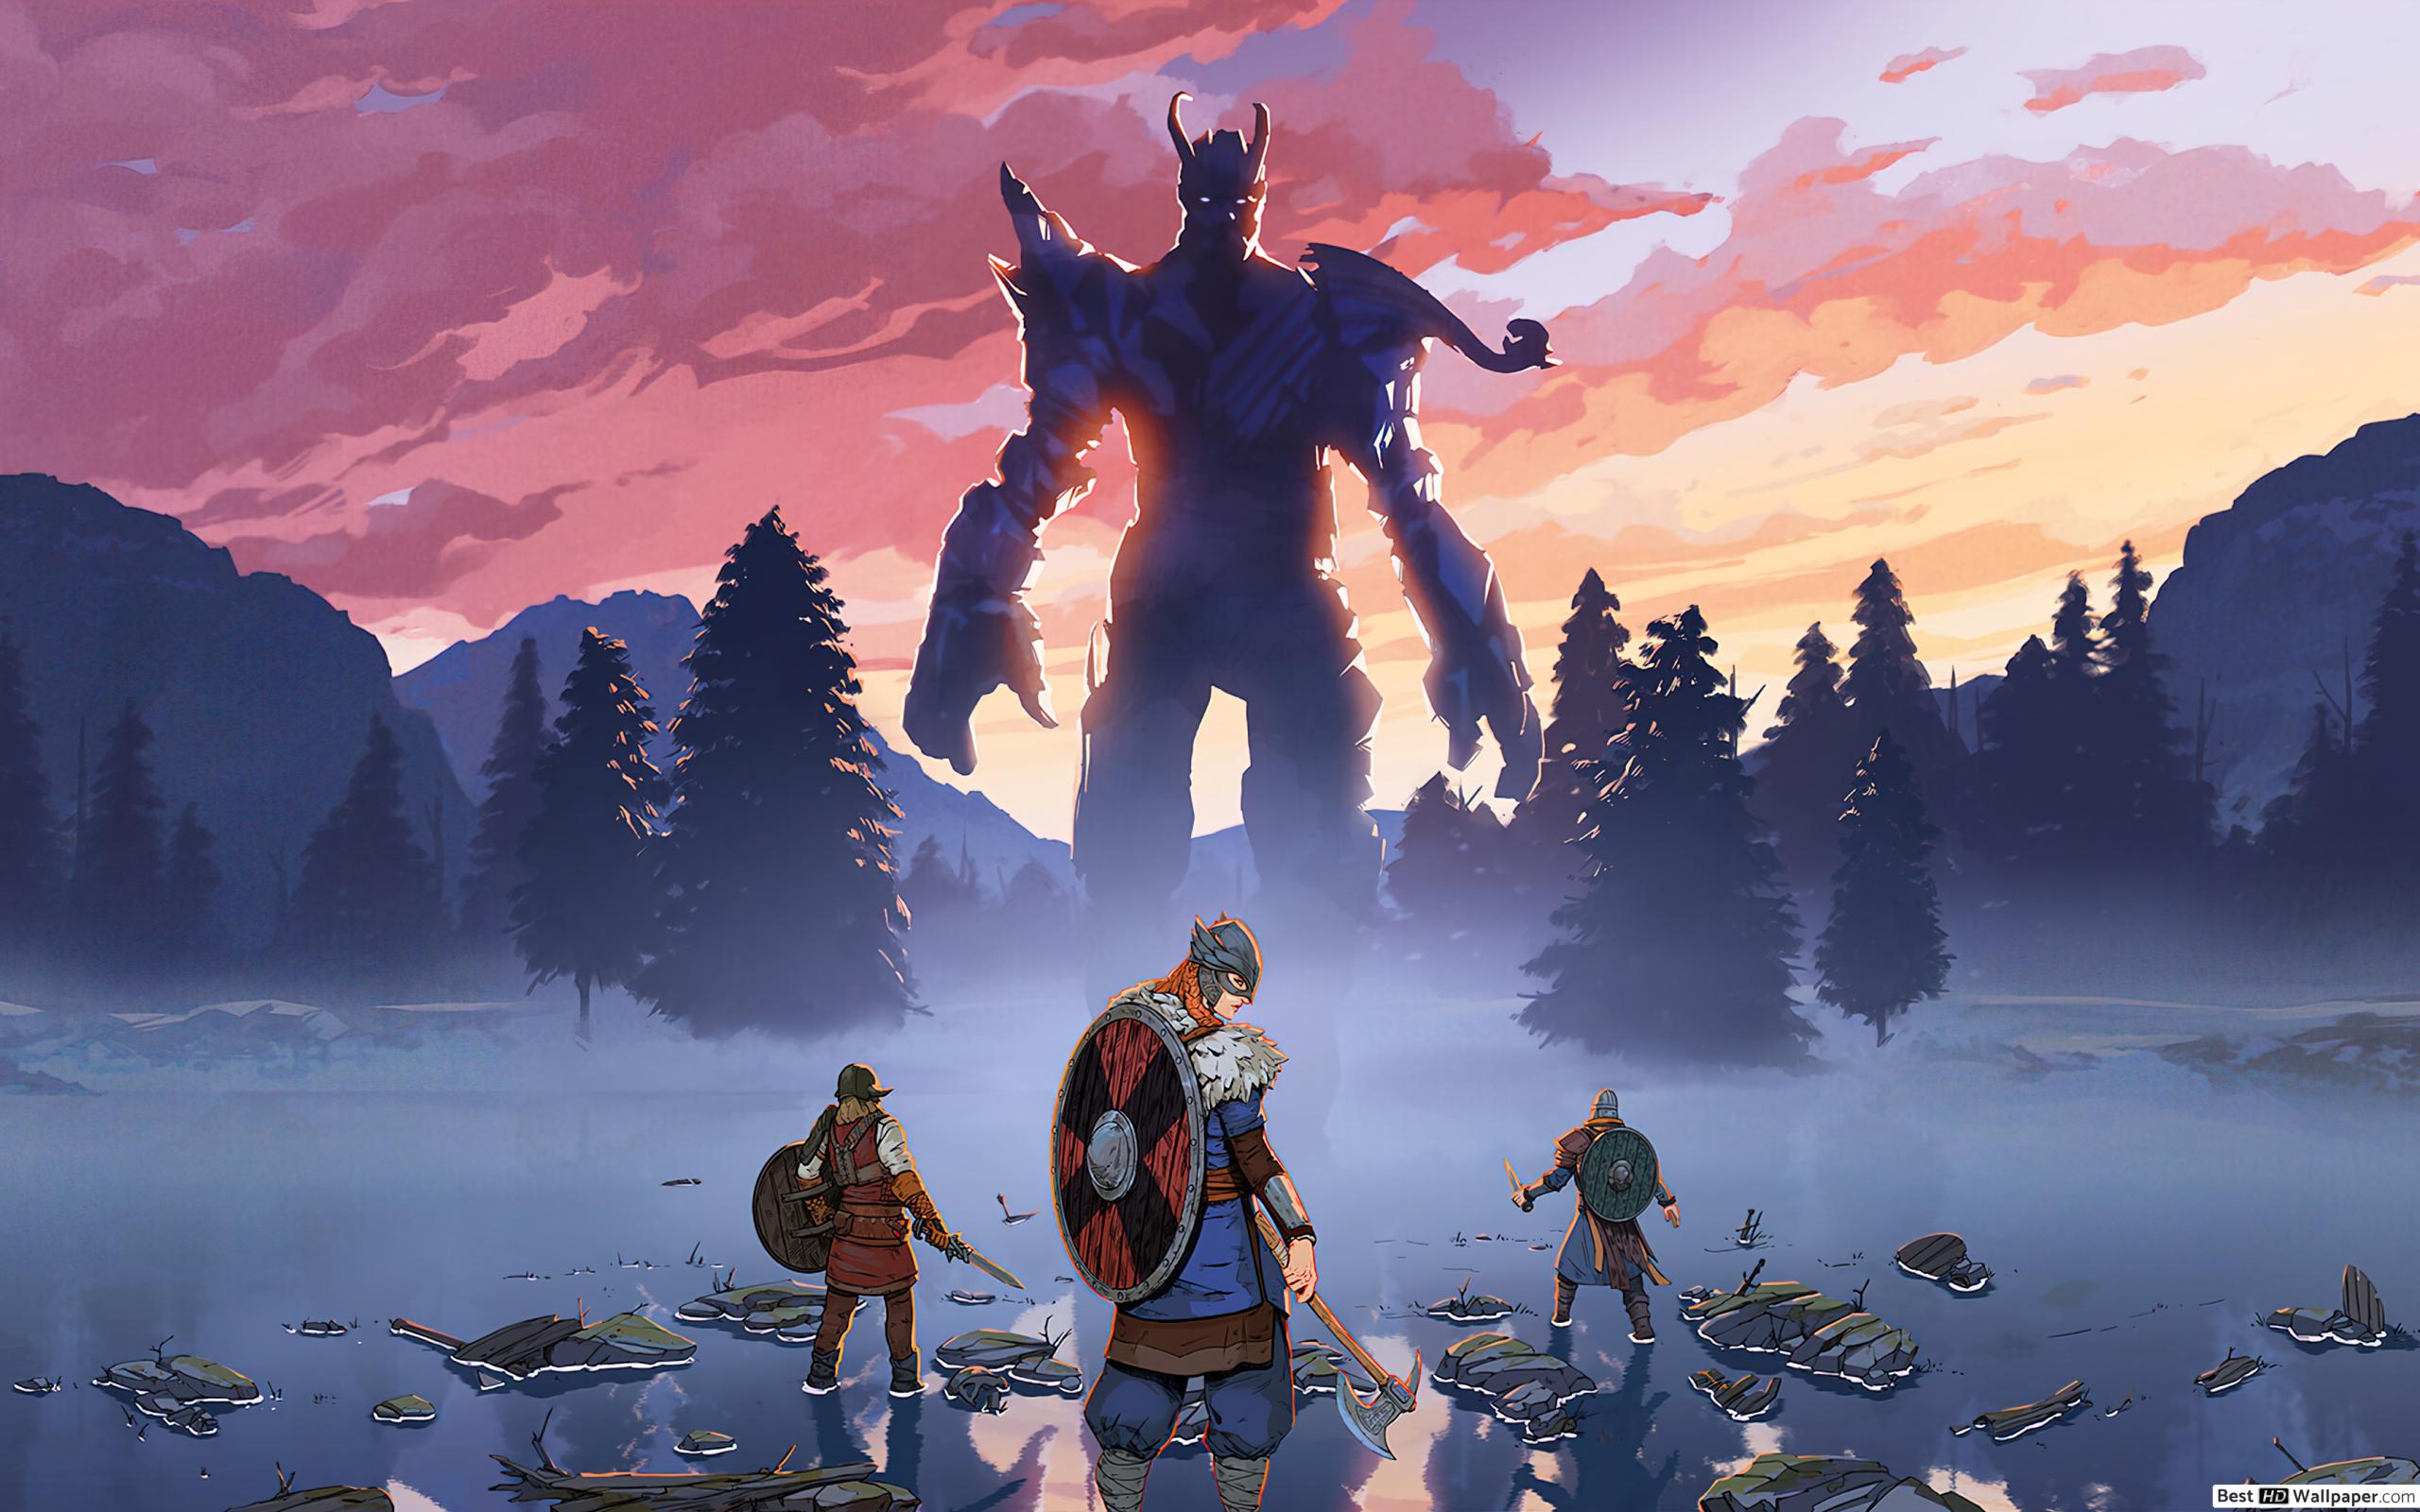 Sunset Frost Demon of Midgard (RPG Video Game) HD wallpaper download